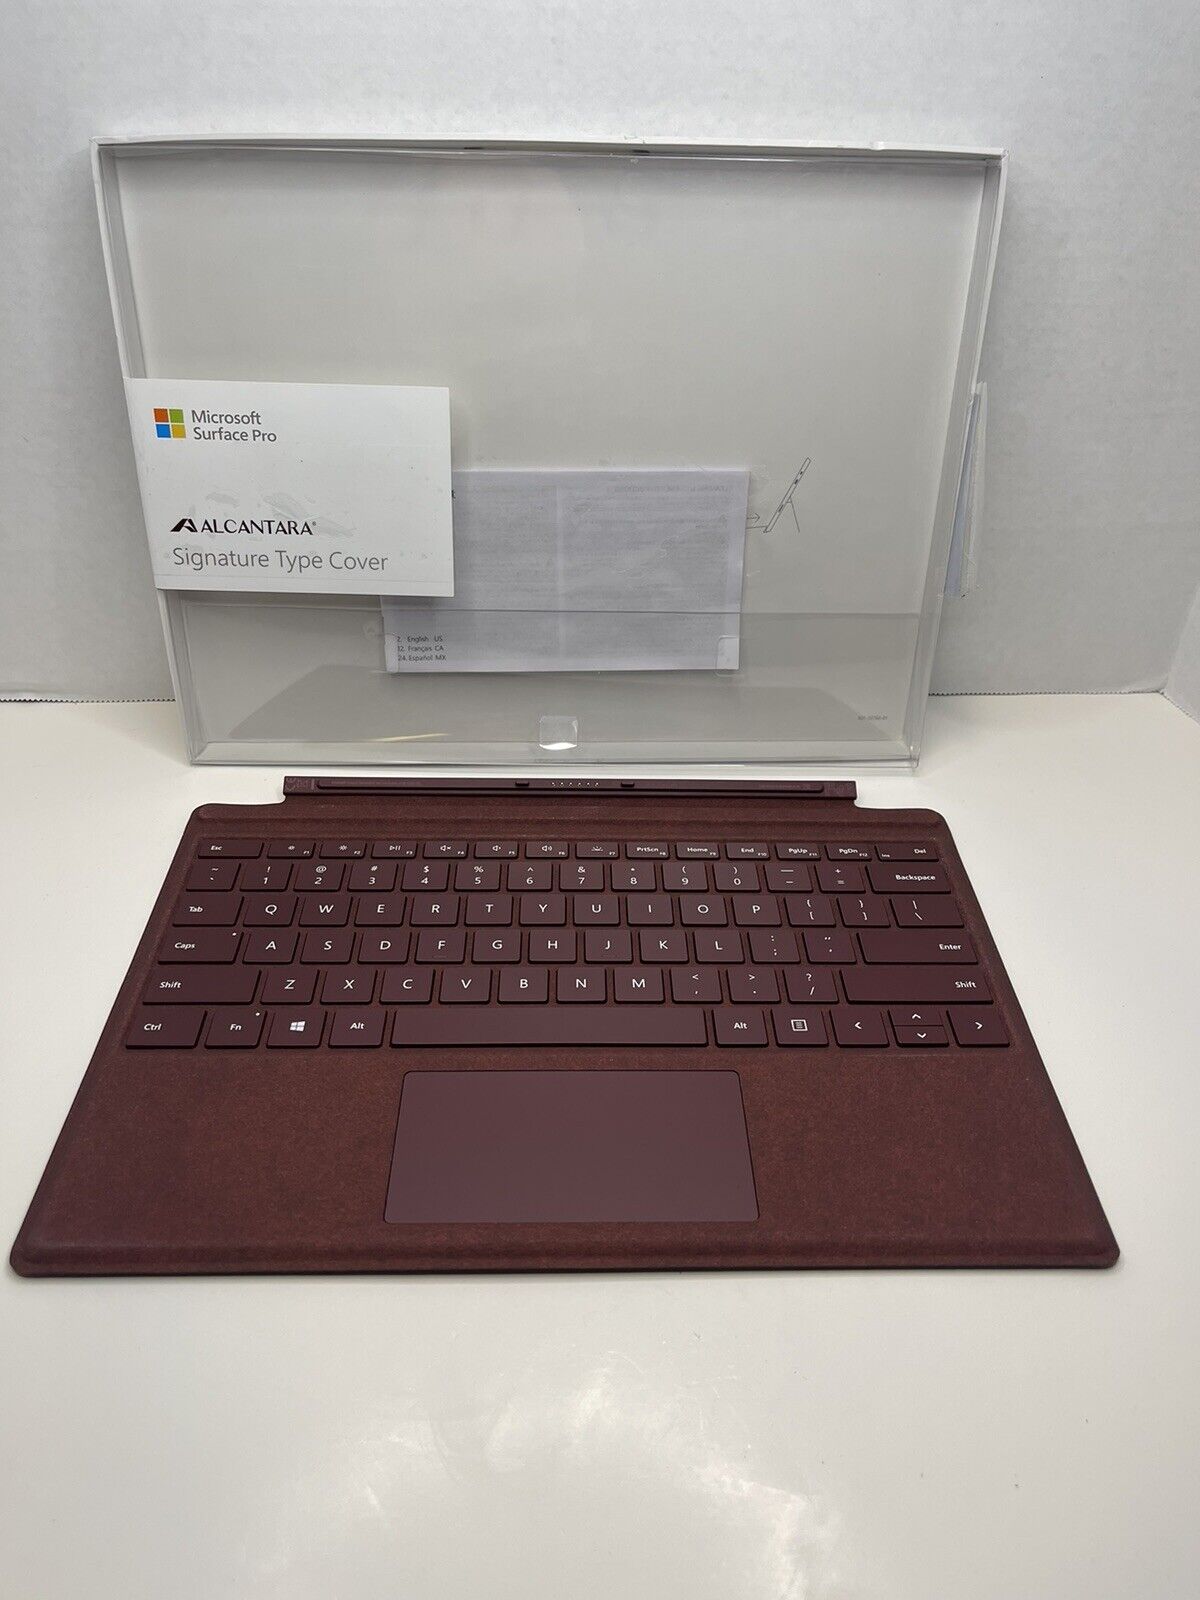 Microsoft Surface Pro Signature Type Cover Alcantara Keyboard - Burgundy - 1725